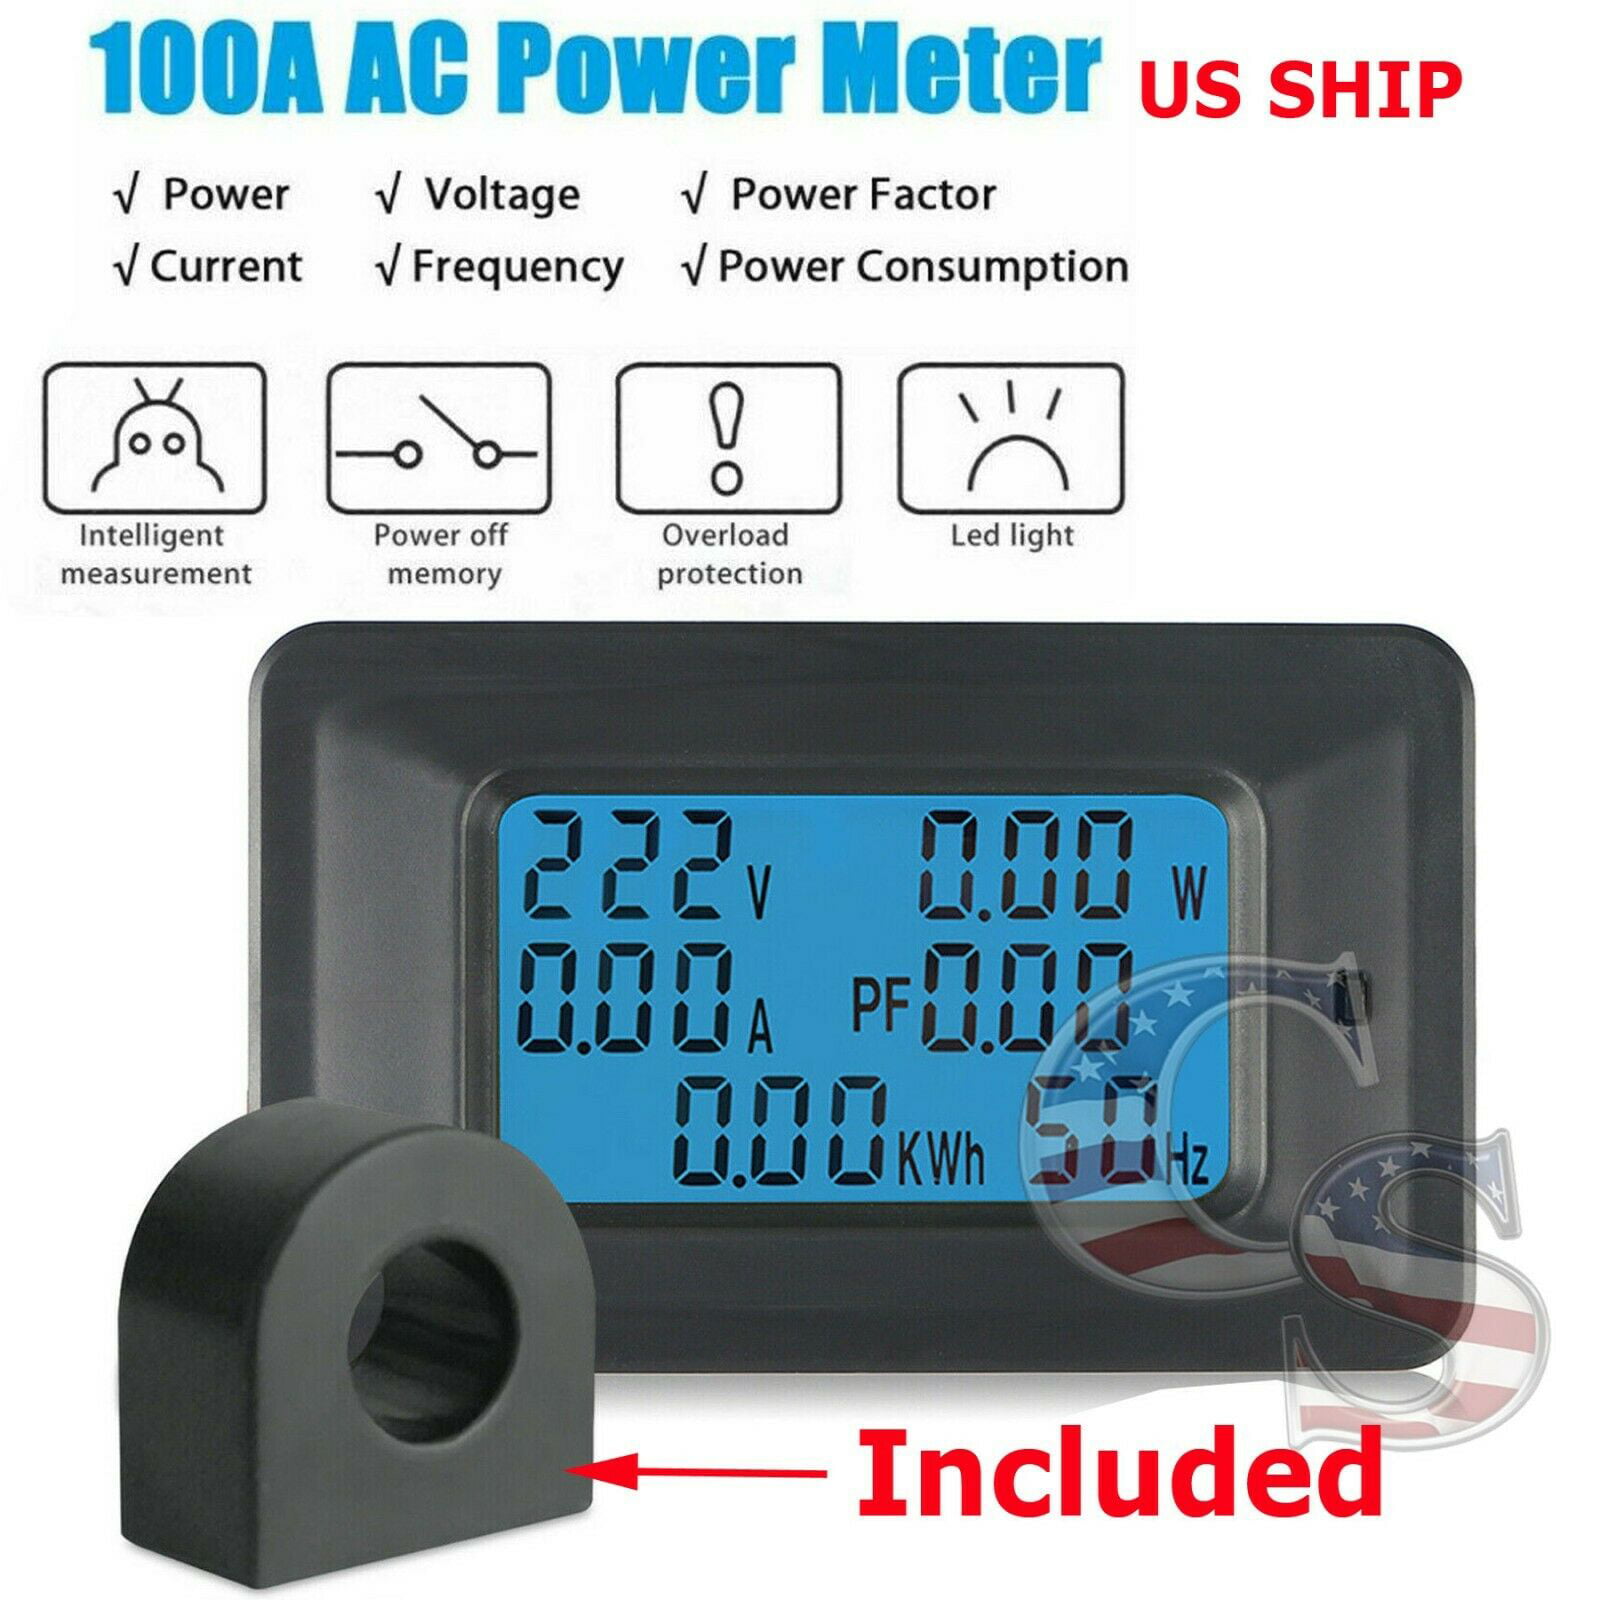 LCD Digital Electrical Combo AC meter Appliance Power Monitor Volt Amp kWh Watt 